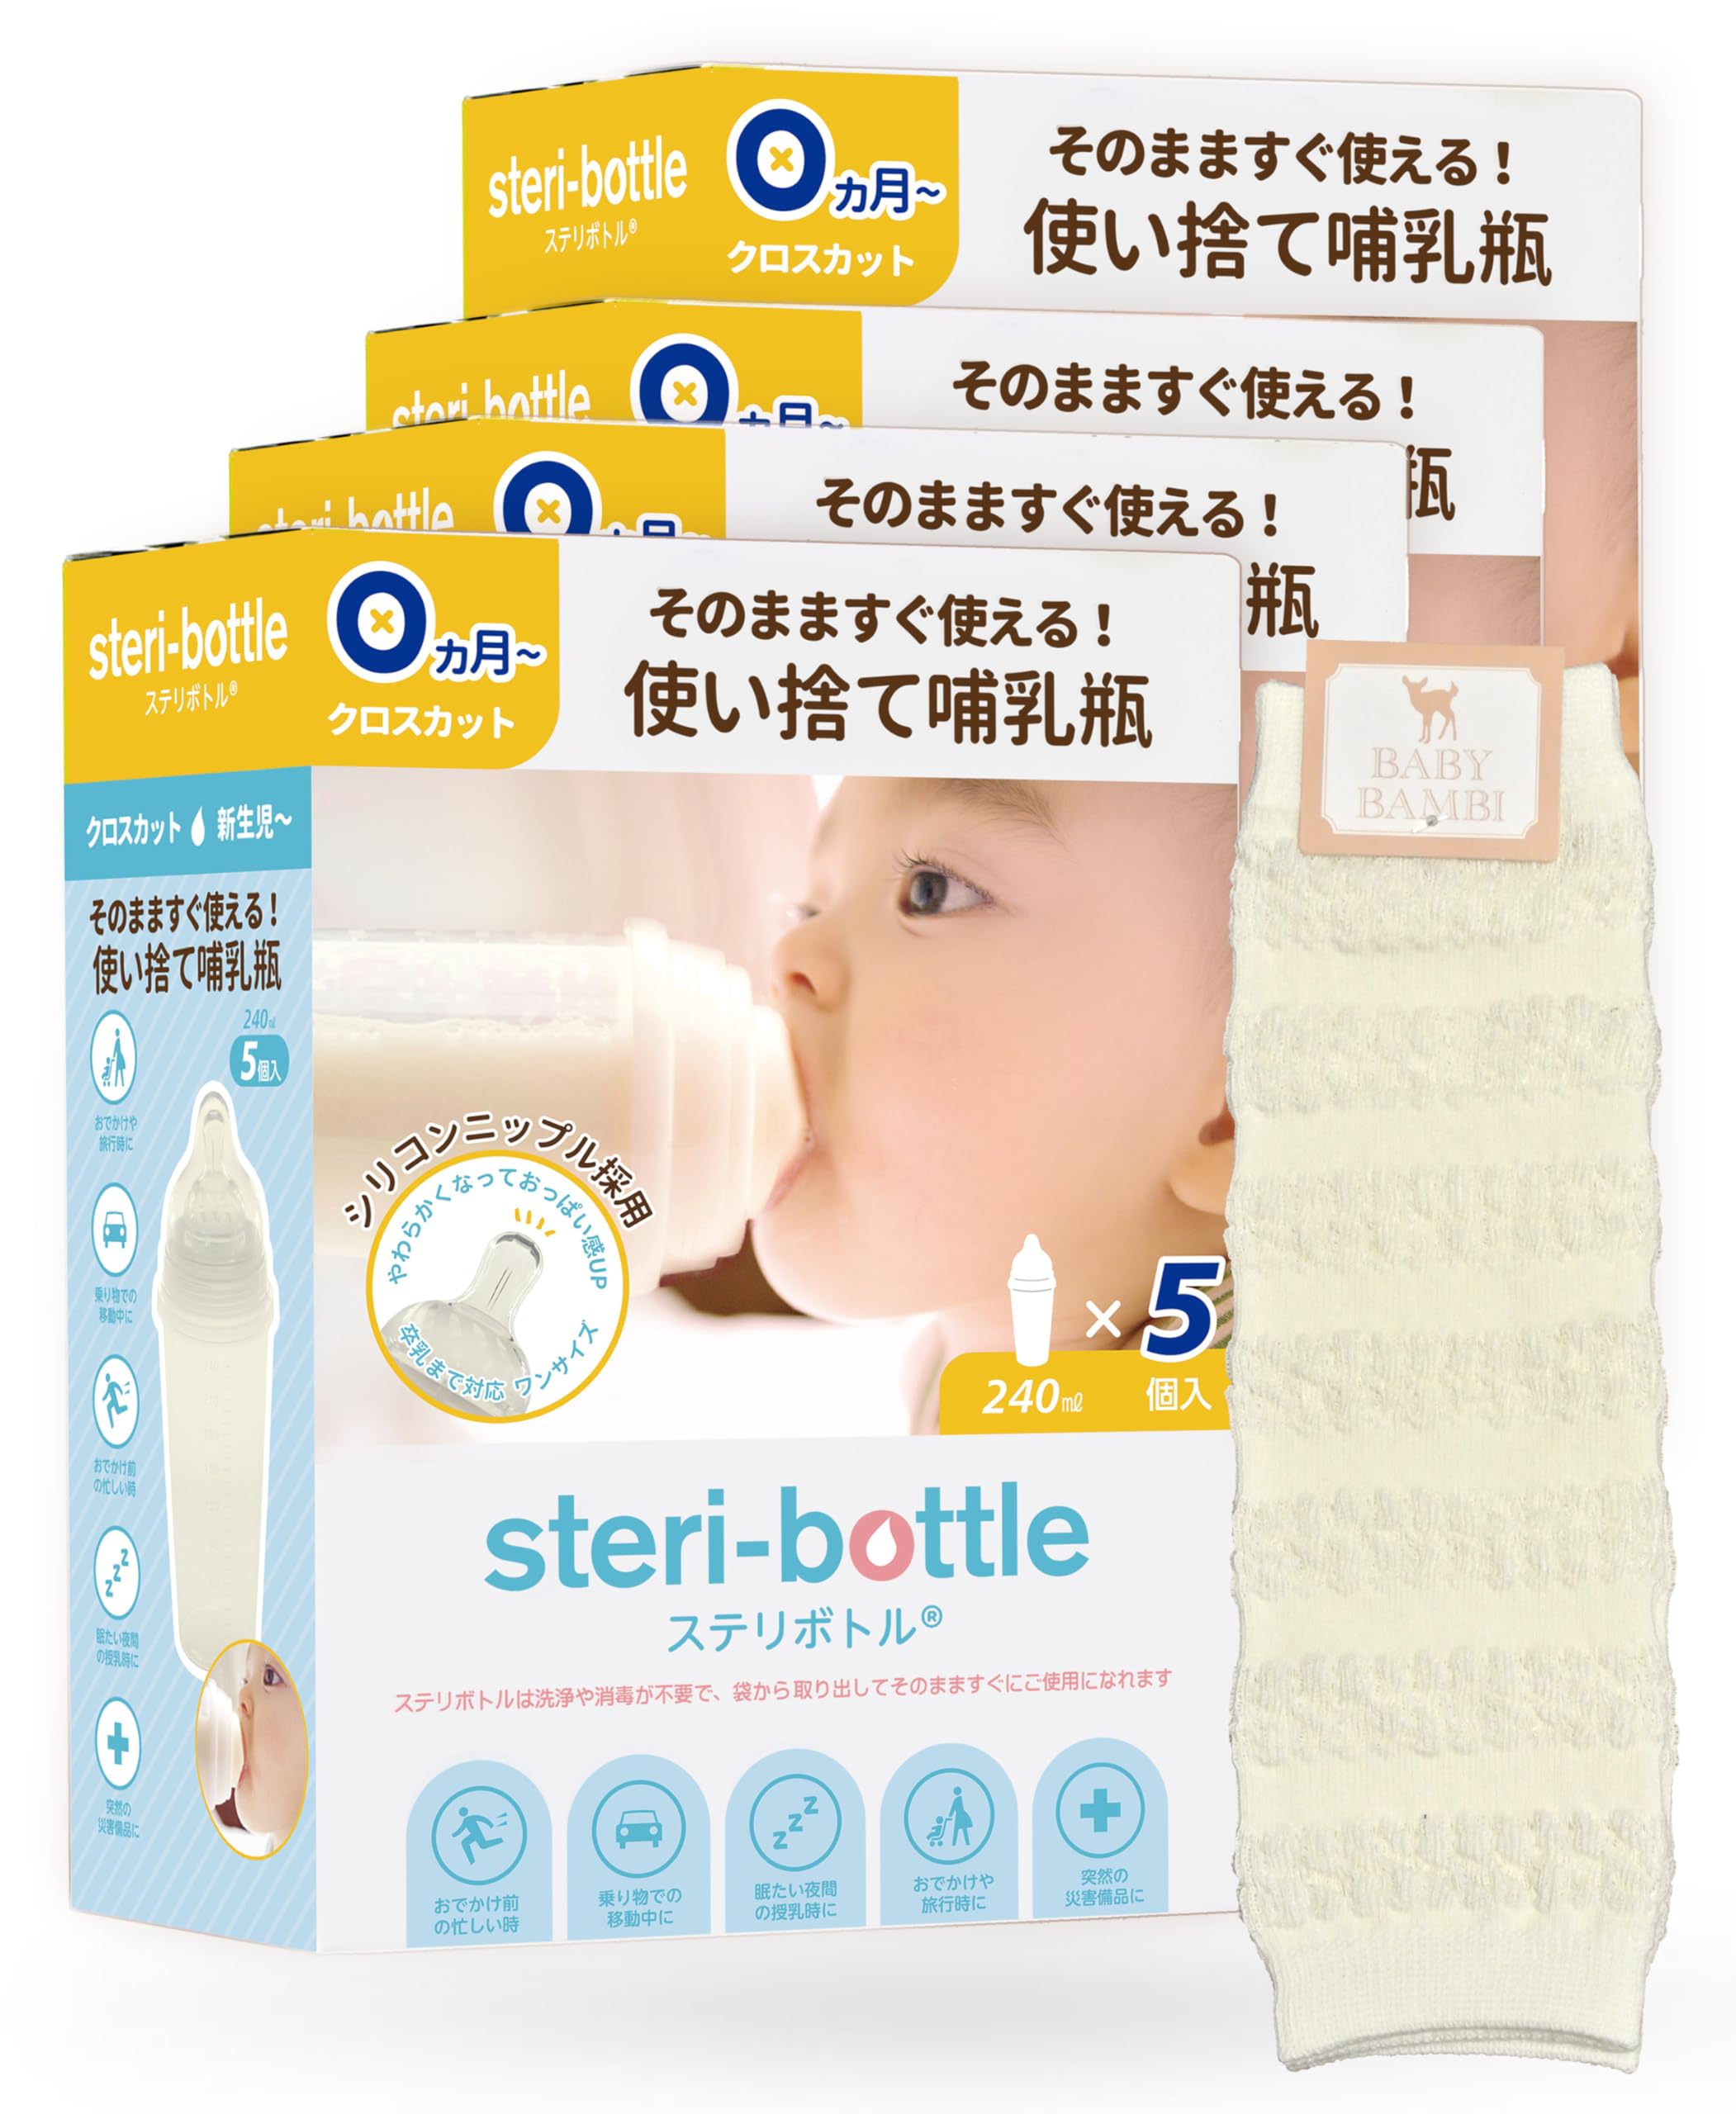 Clovis Baby(クロビスベビー) ステリボトル 消毒不要使い捨て哺乳瓶(240ml)5個入り4箱 日本正規品 & 美人家オリジナル ベビー用 レ